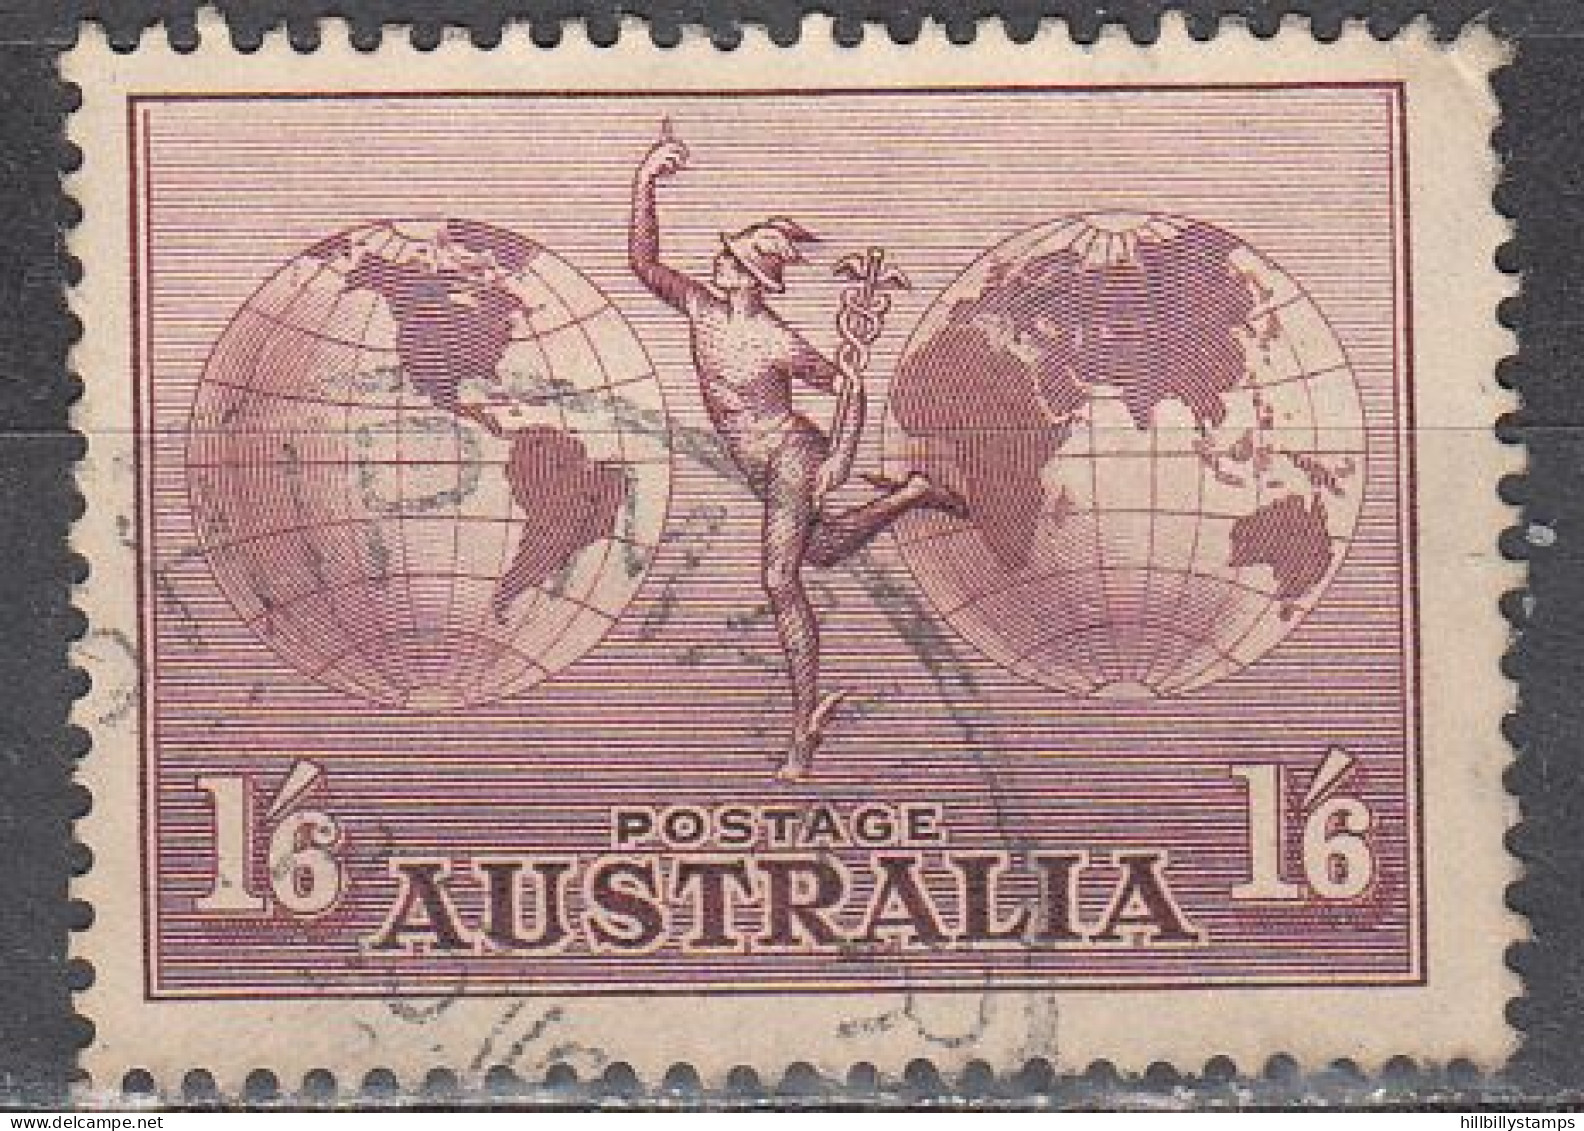 AUSTRALIA   SCOTT NO C5  USED   YEAR  1937 - Used Stamps